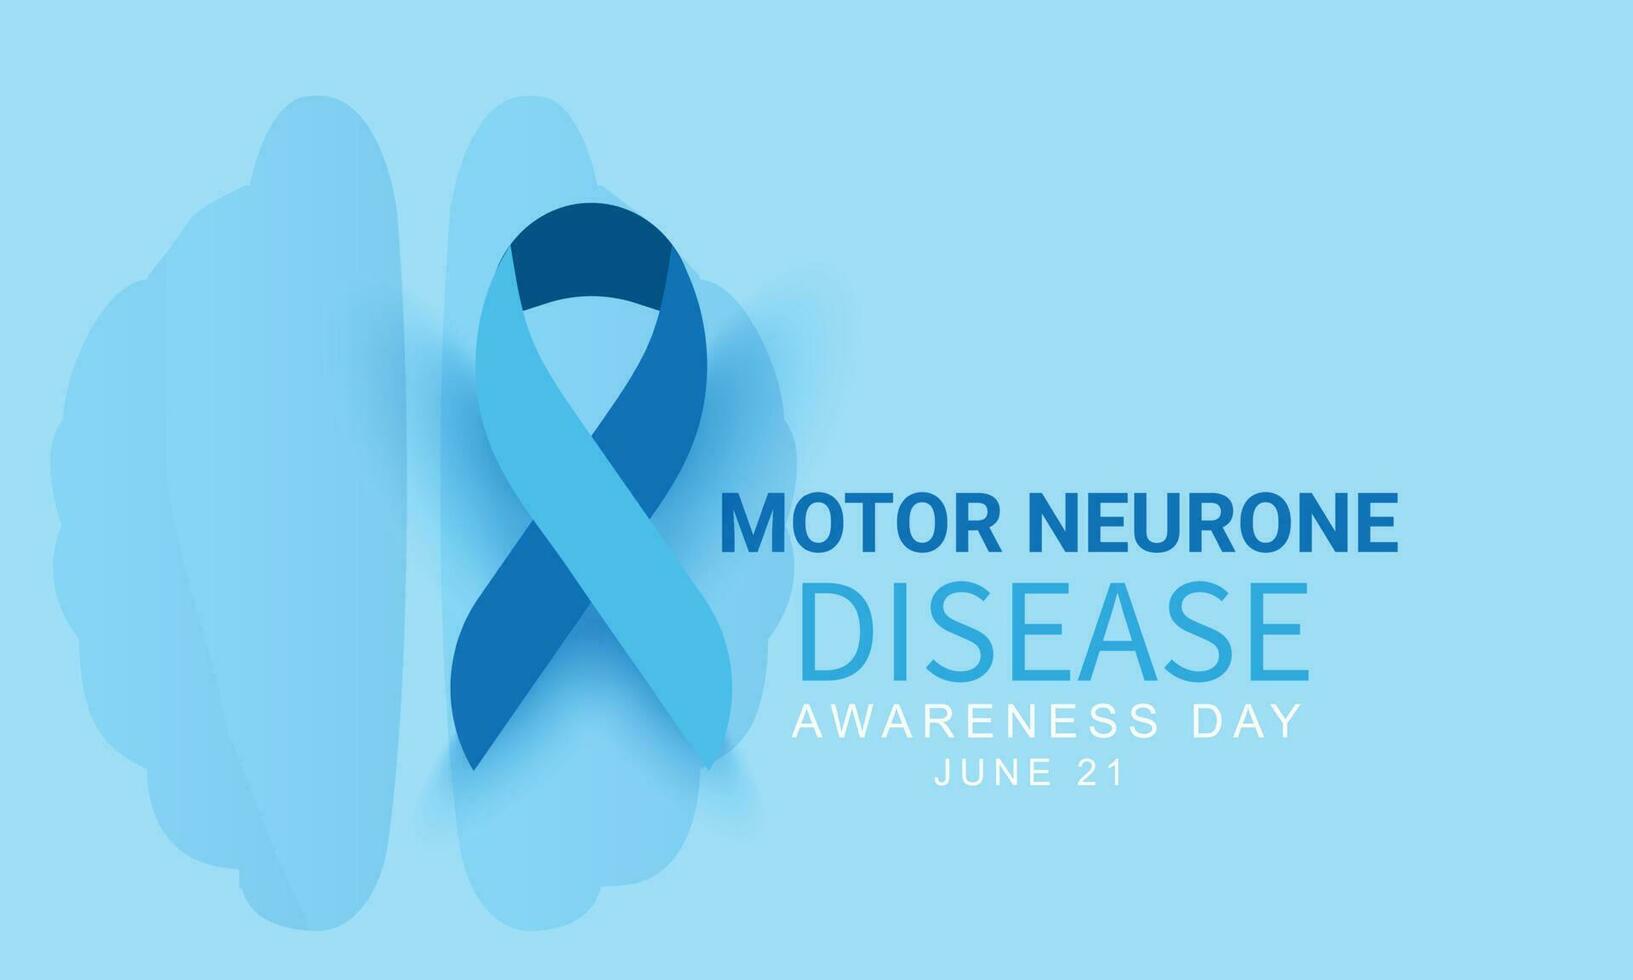 World Motor Neurone disease awareness day. background, banner, card, poster, template. Vector illustration.